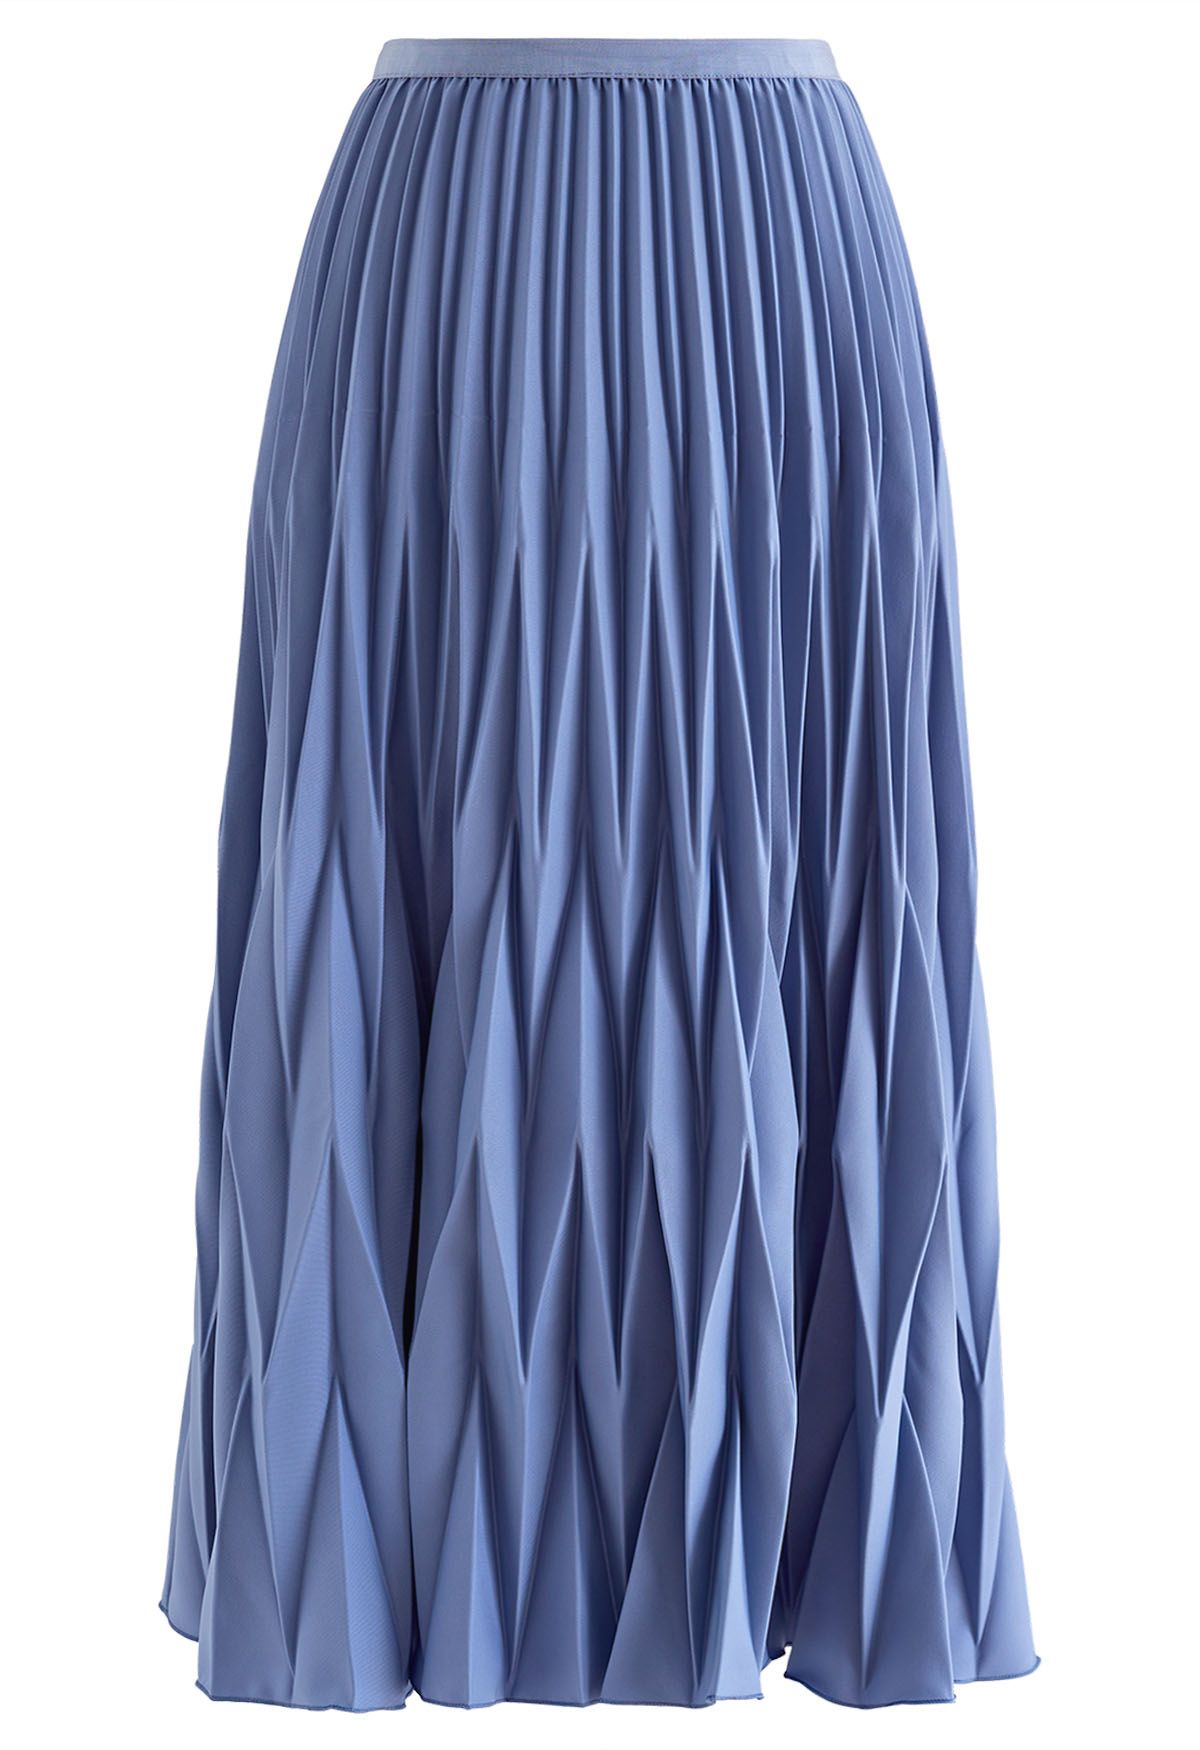 Irregular Pleated Midi Skirt in Dusty Blue